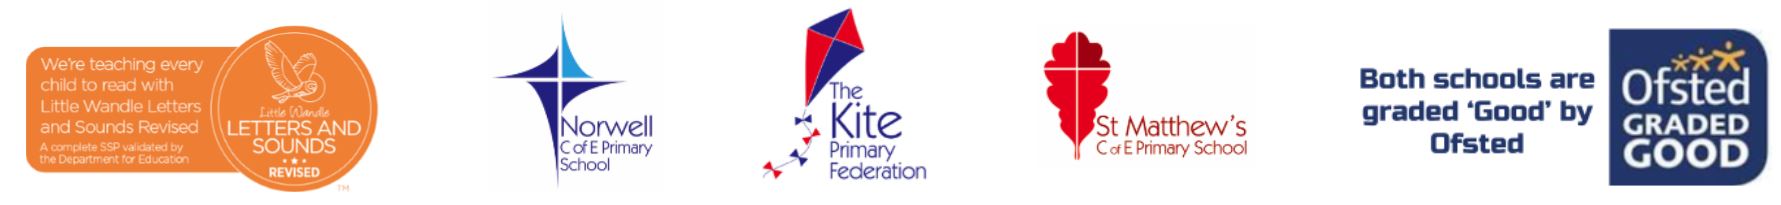 The Kite Primary Federation